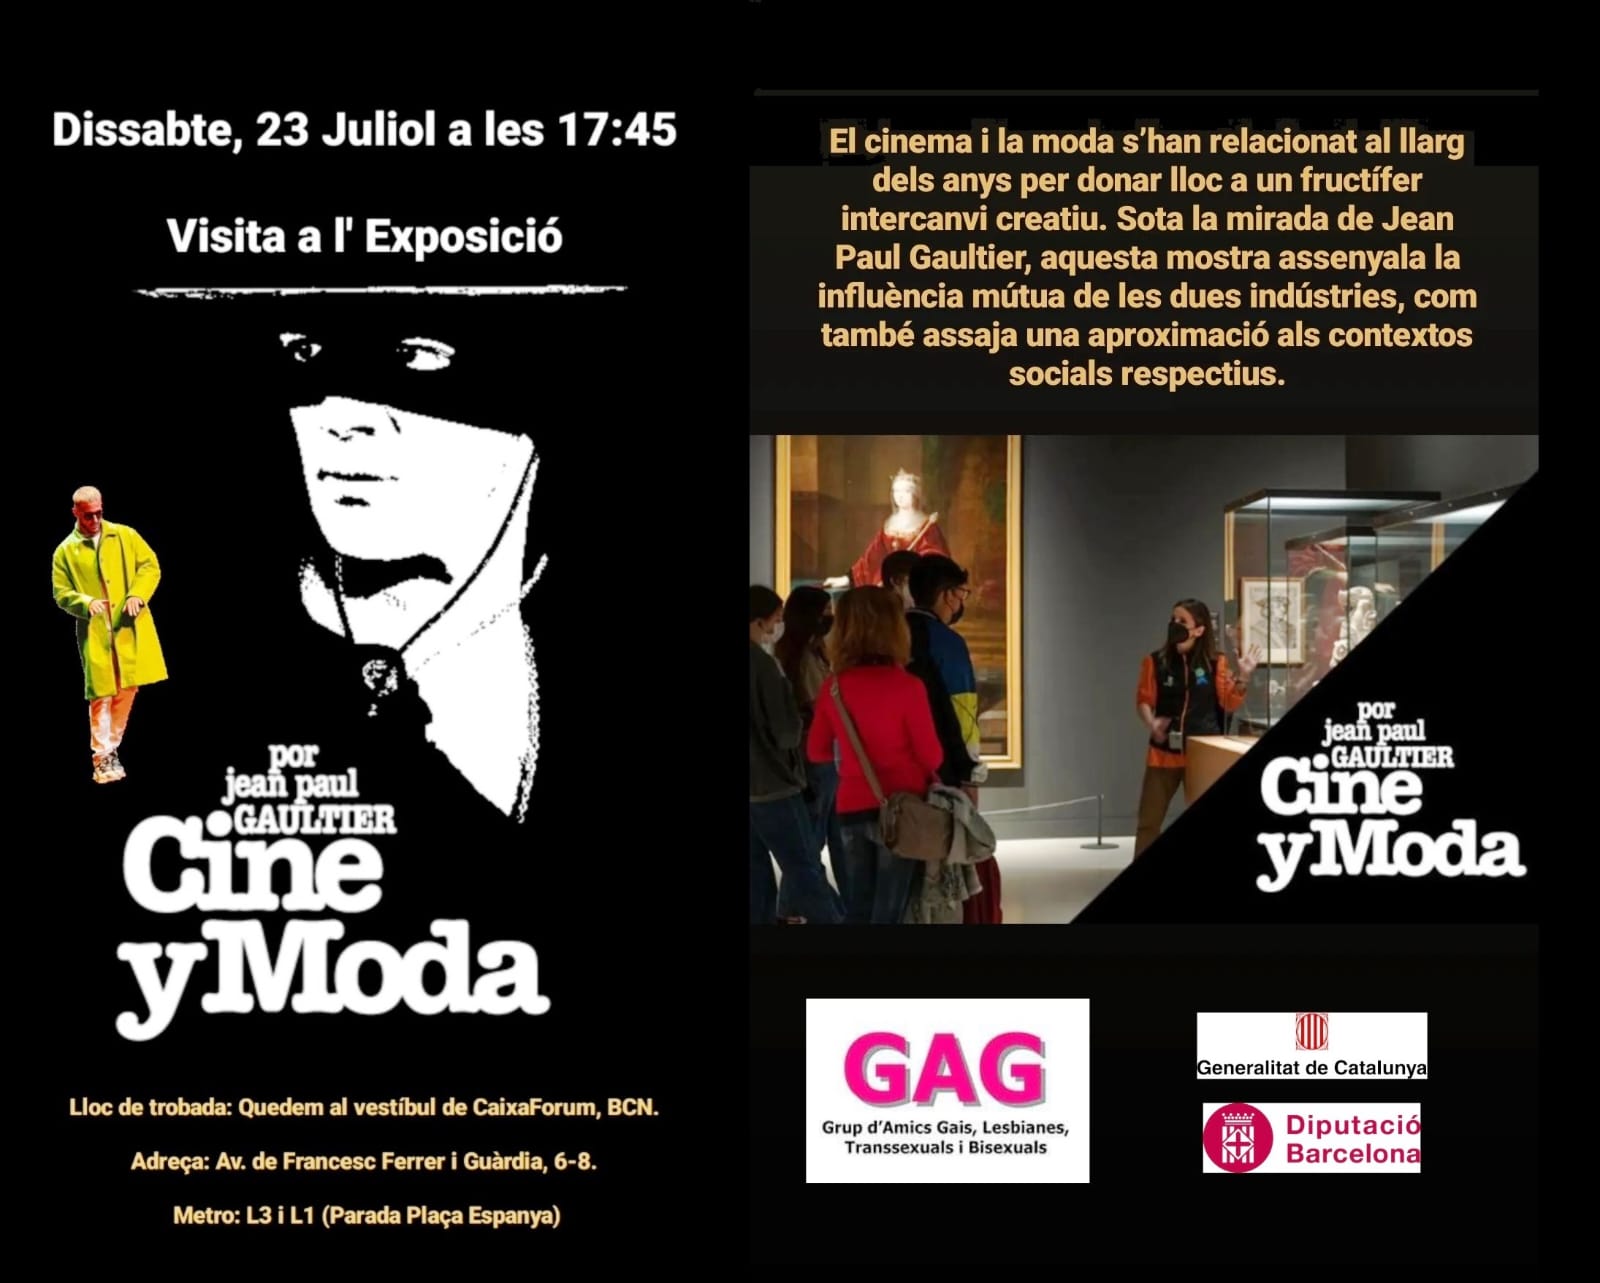 Dissabte, 23 juliol a les 17:45 h – Exposició Cine y Moda per jean paul GAULTIER